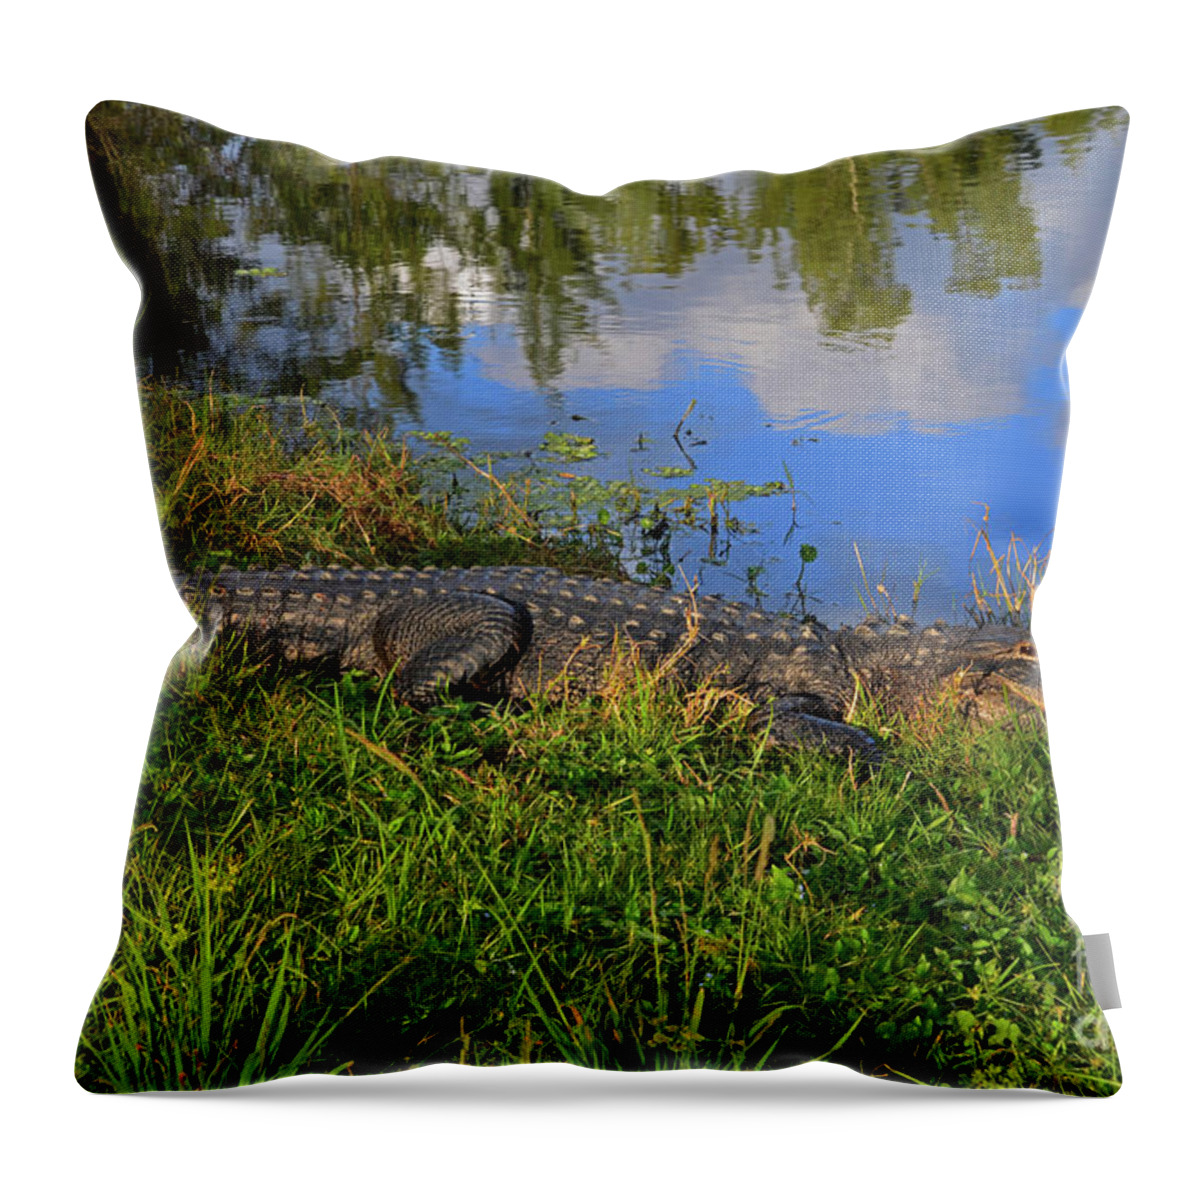  Alligators Throw Pillow featuring the photograph 1- Alligator by Joseph Keane